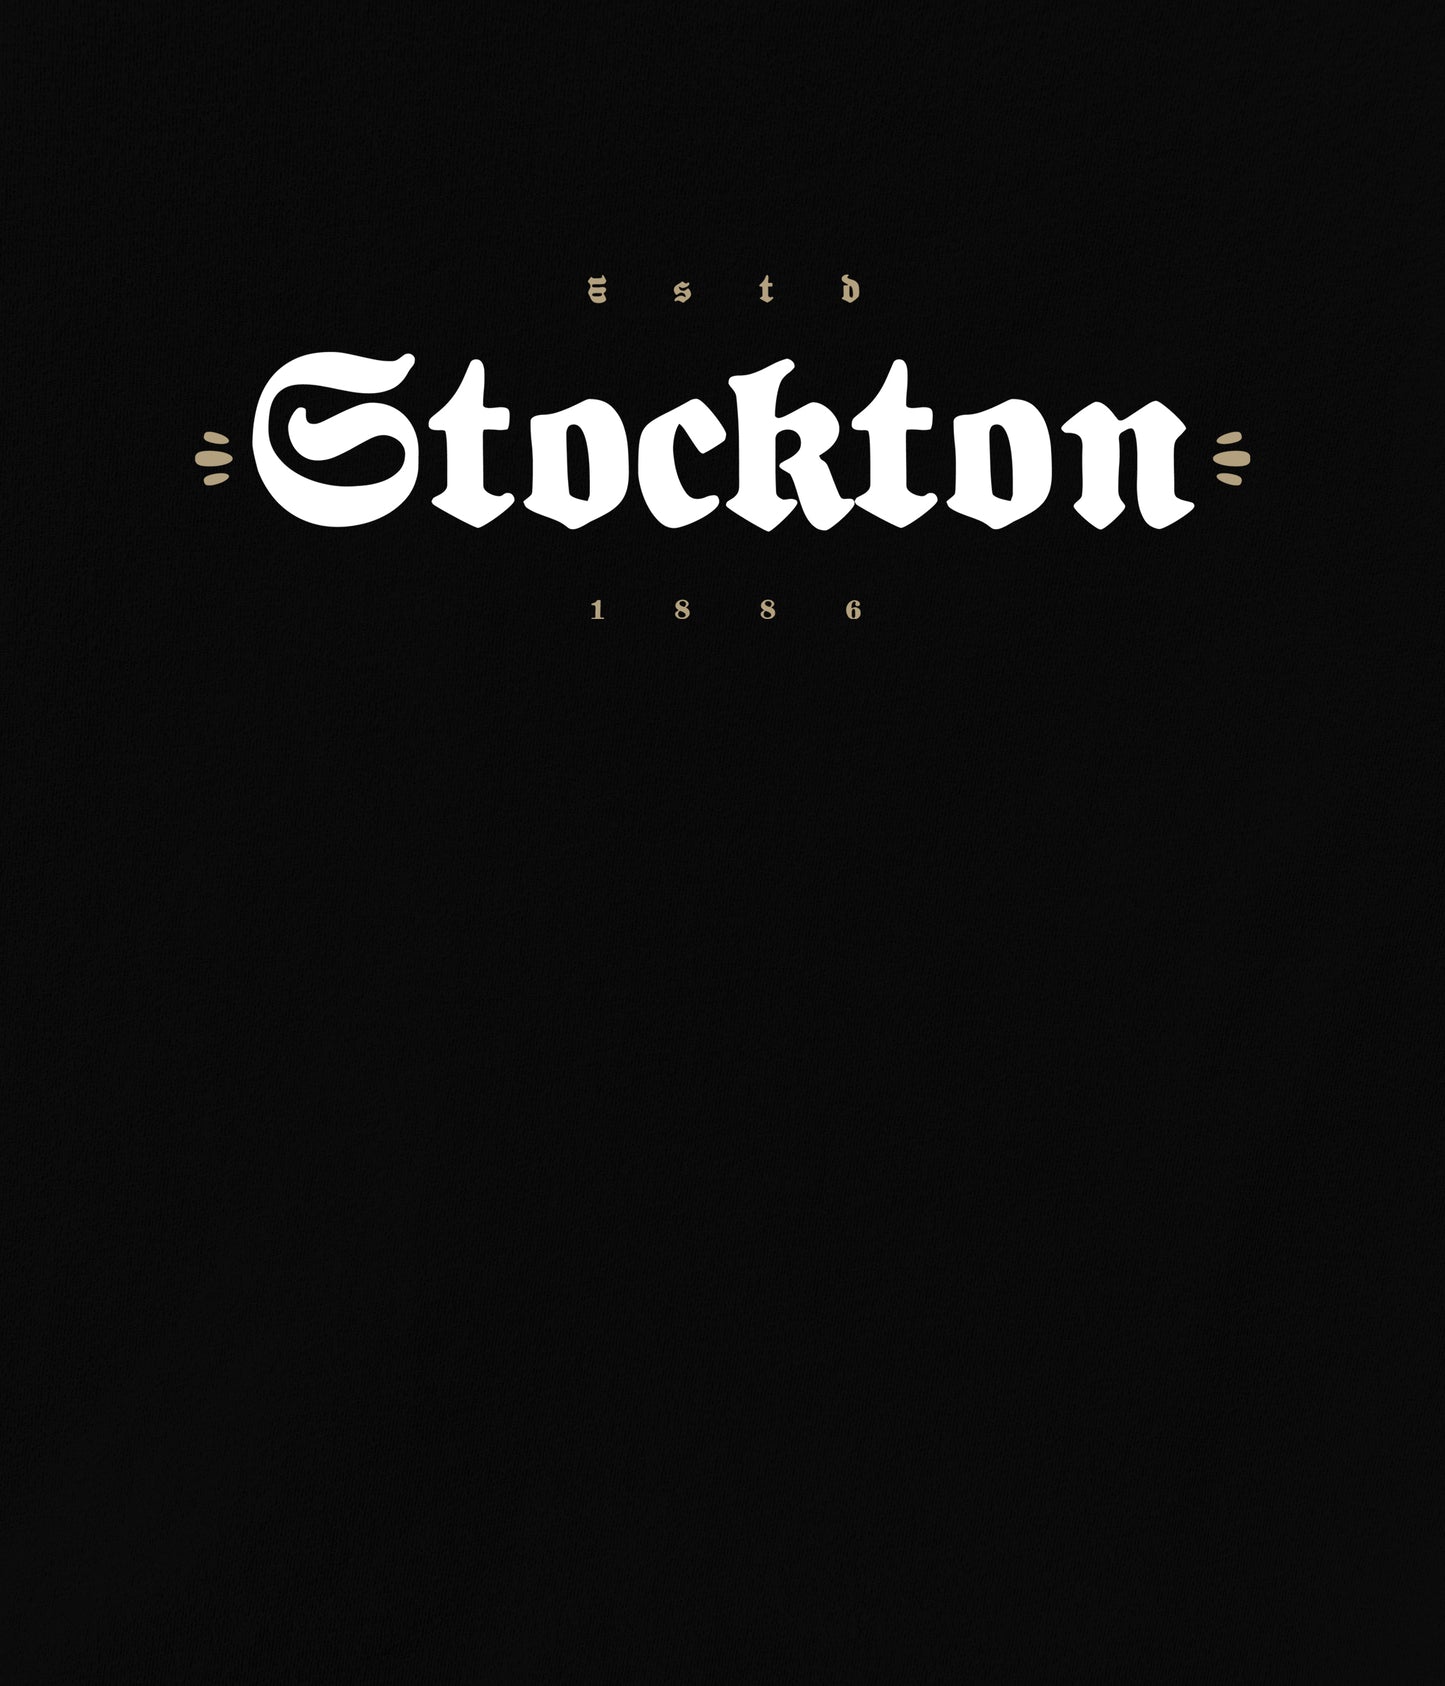 Stockton Established Hoody